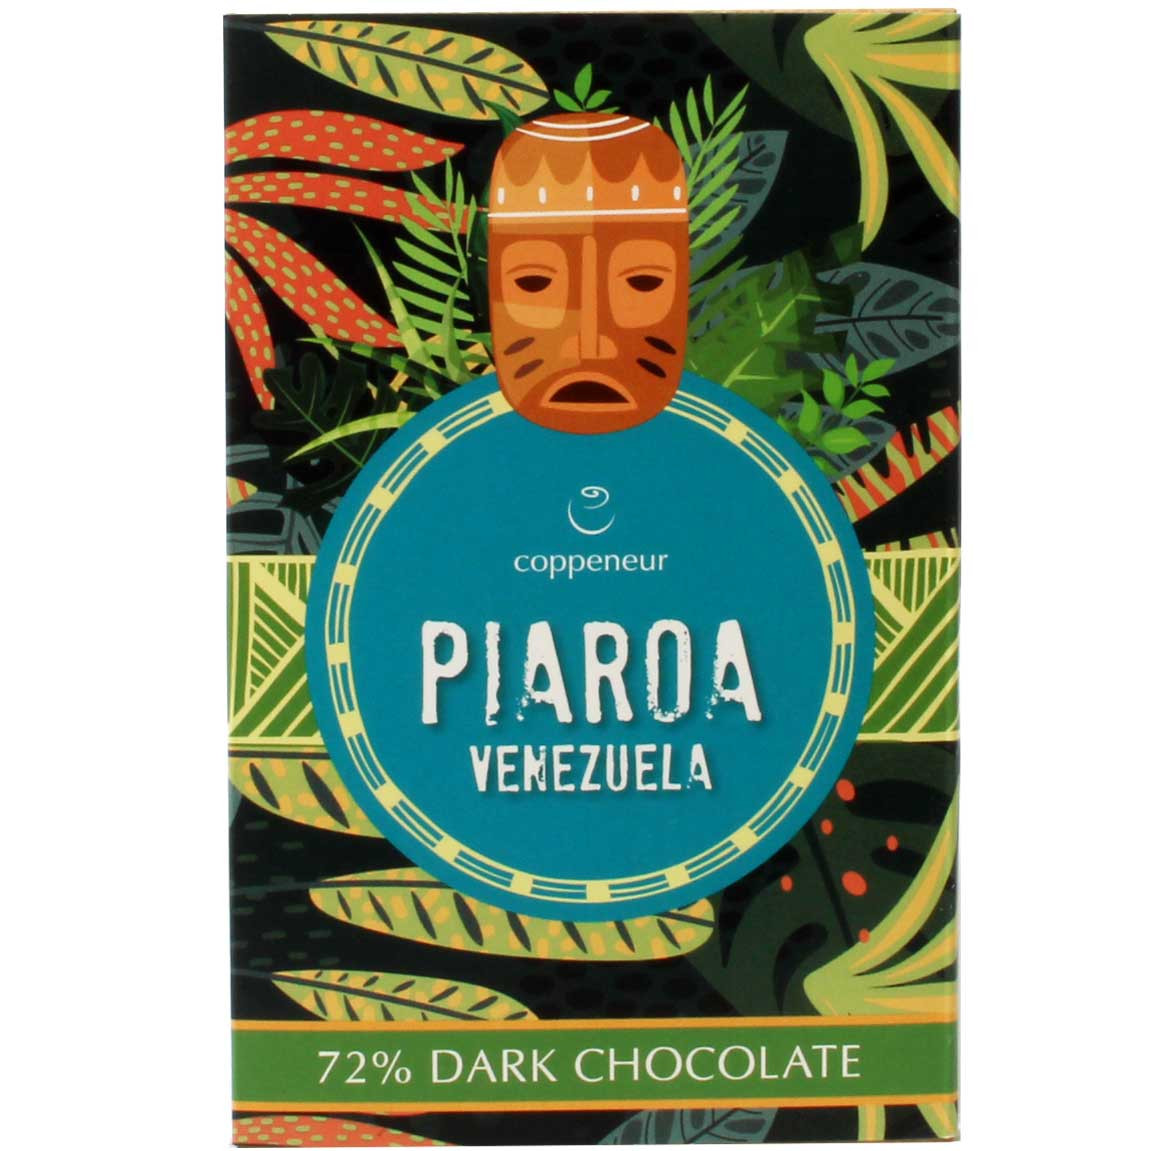 Piaroa Venezuela 72% dark chocolate - Bar of Chocolate, Germany, german chocolate - Chocolats-De-Luxe